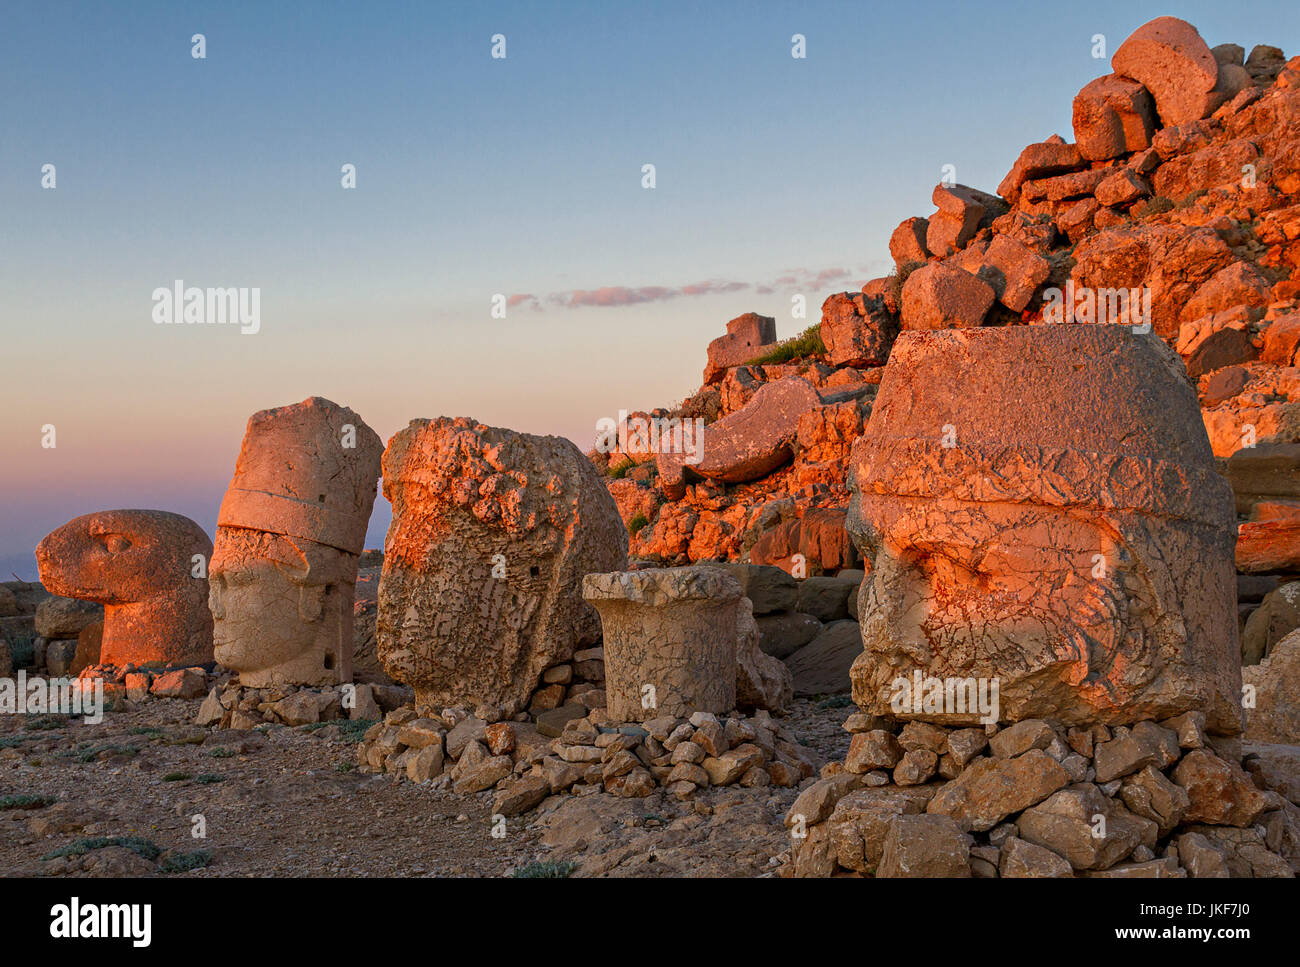 Nemrut Mountain Sanctuary, ruins of the Commagene civilization site, Turkey. Stock Photo